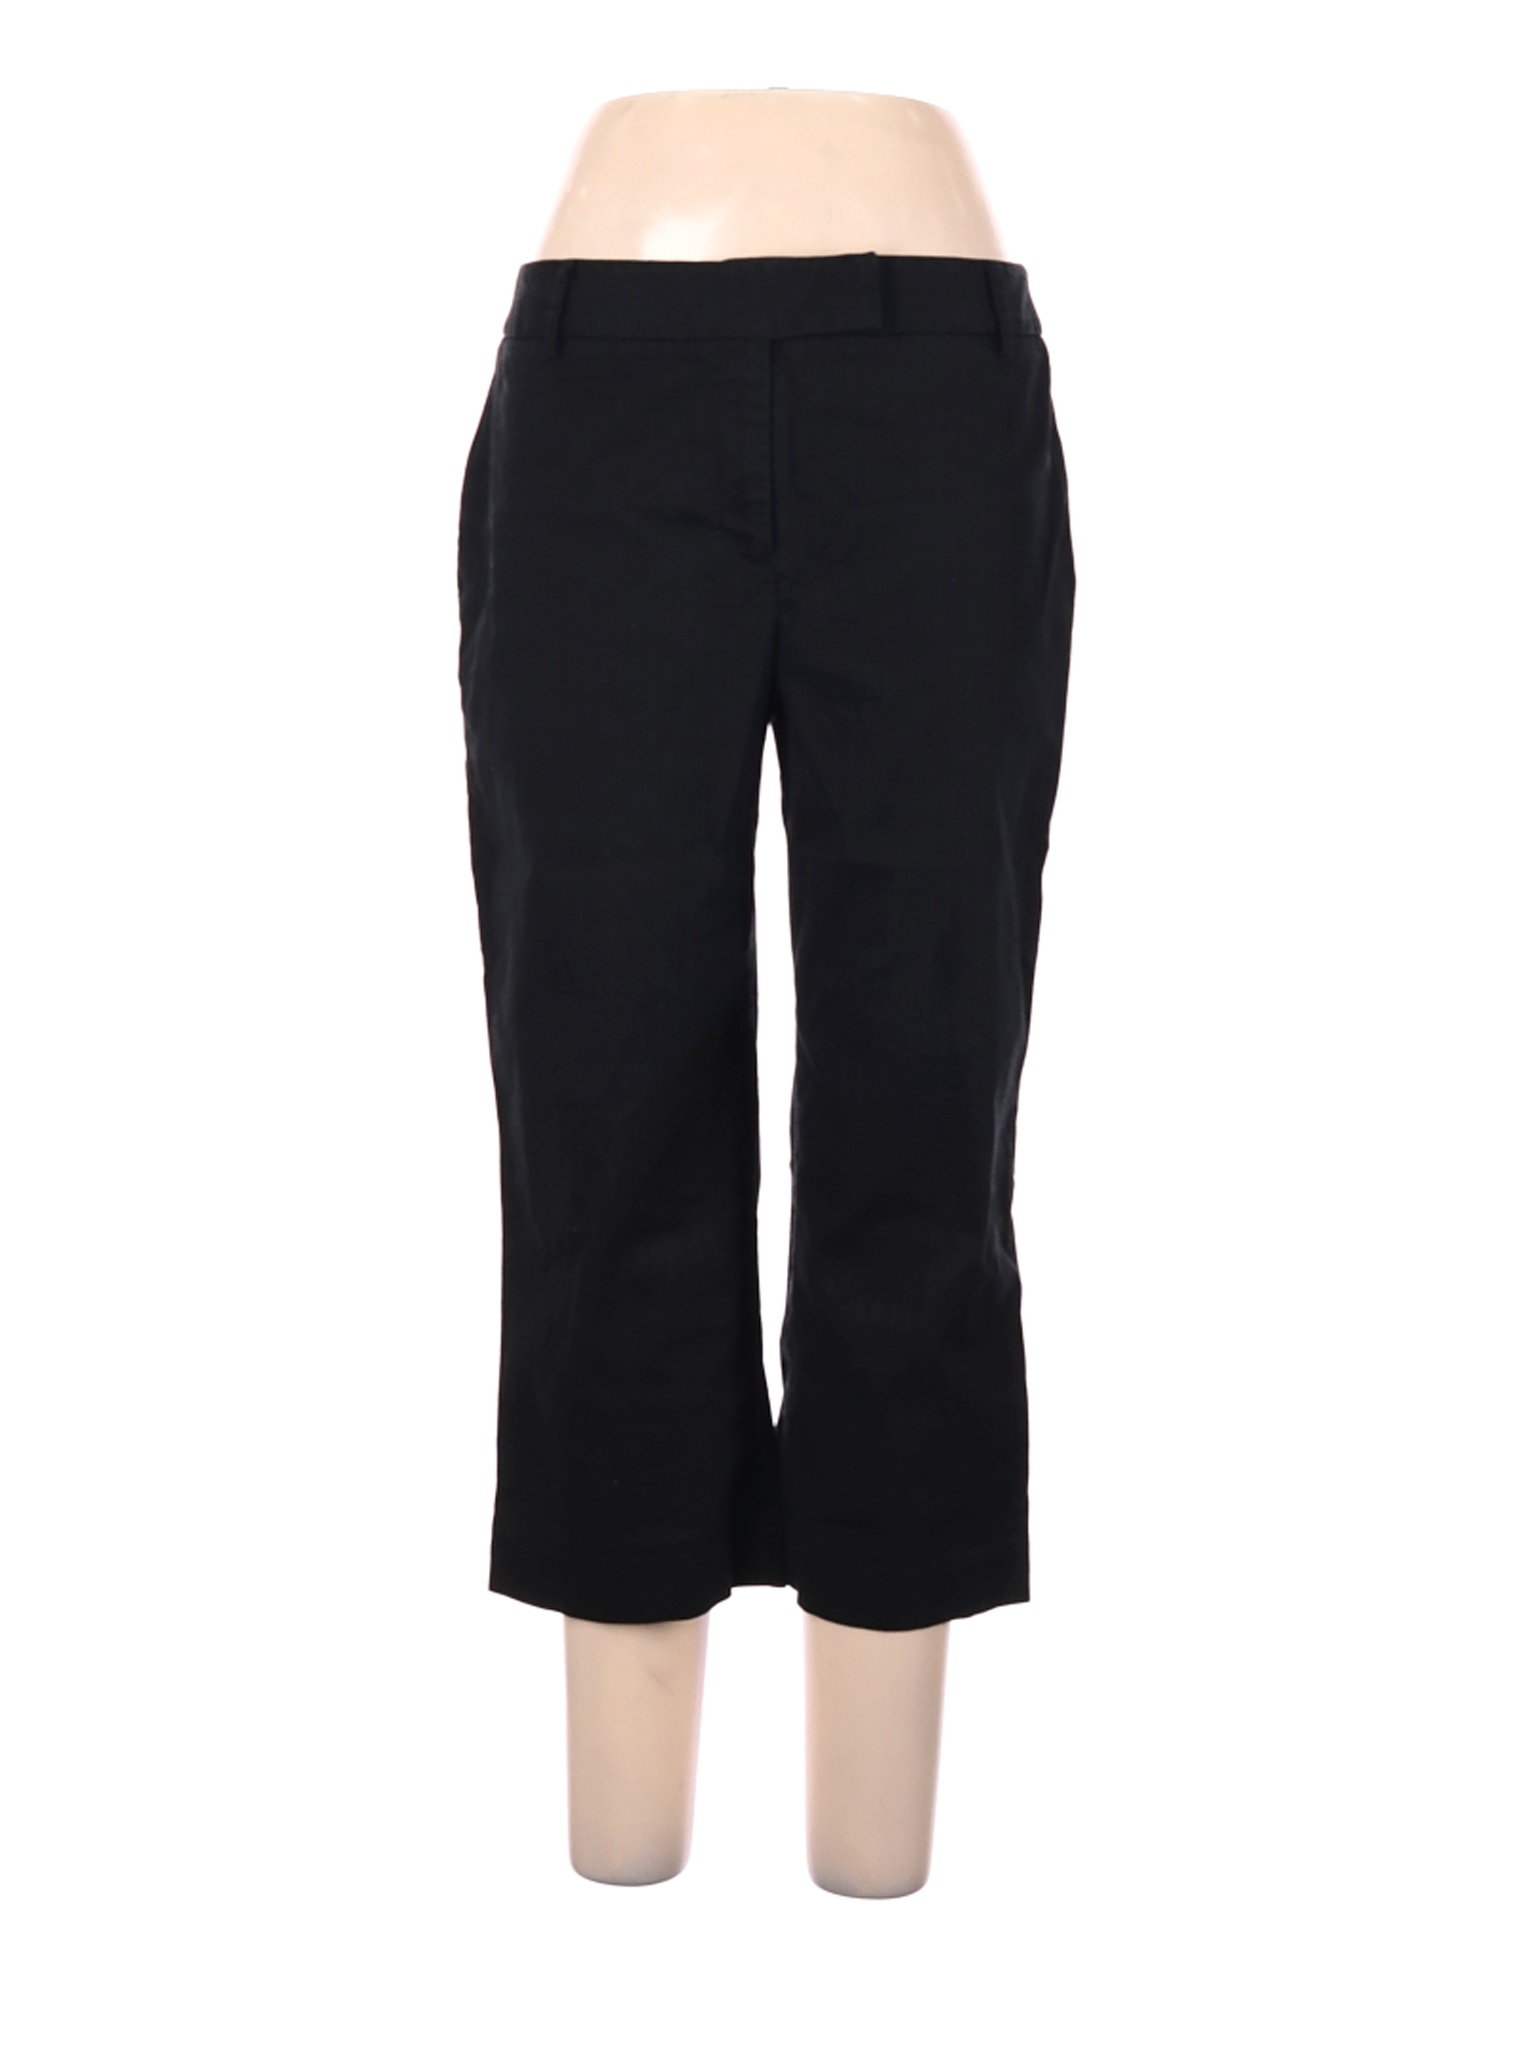 Unlisted Women Black Casual Pants 12 | eBay